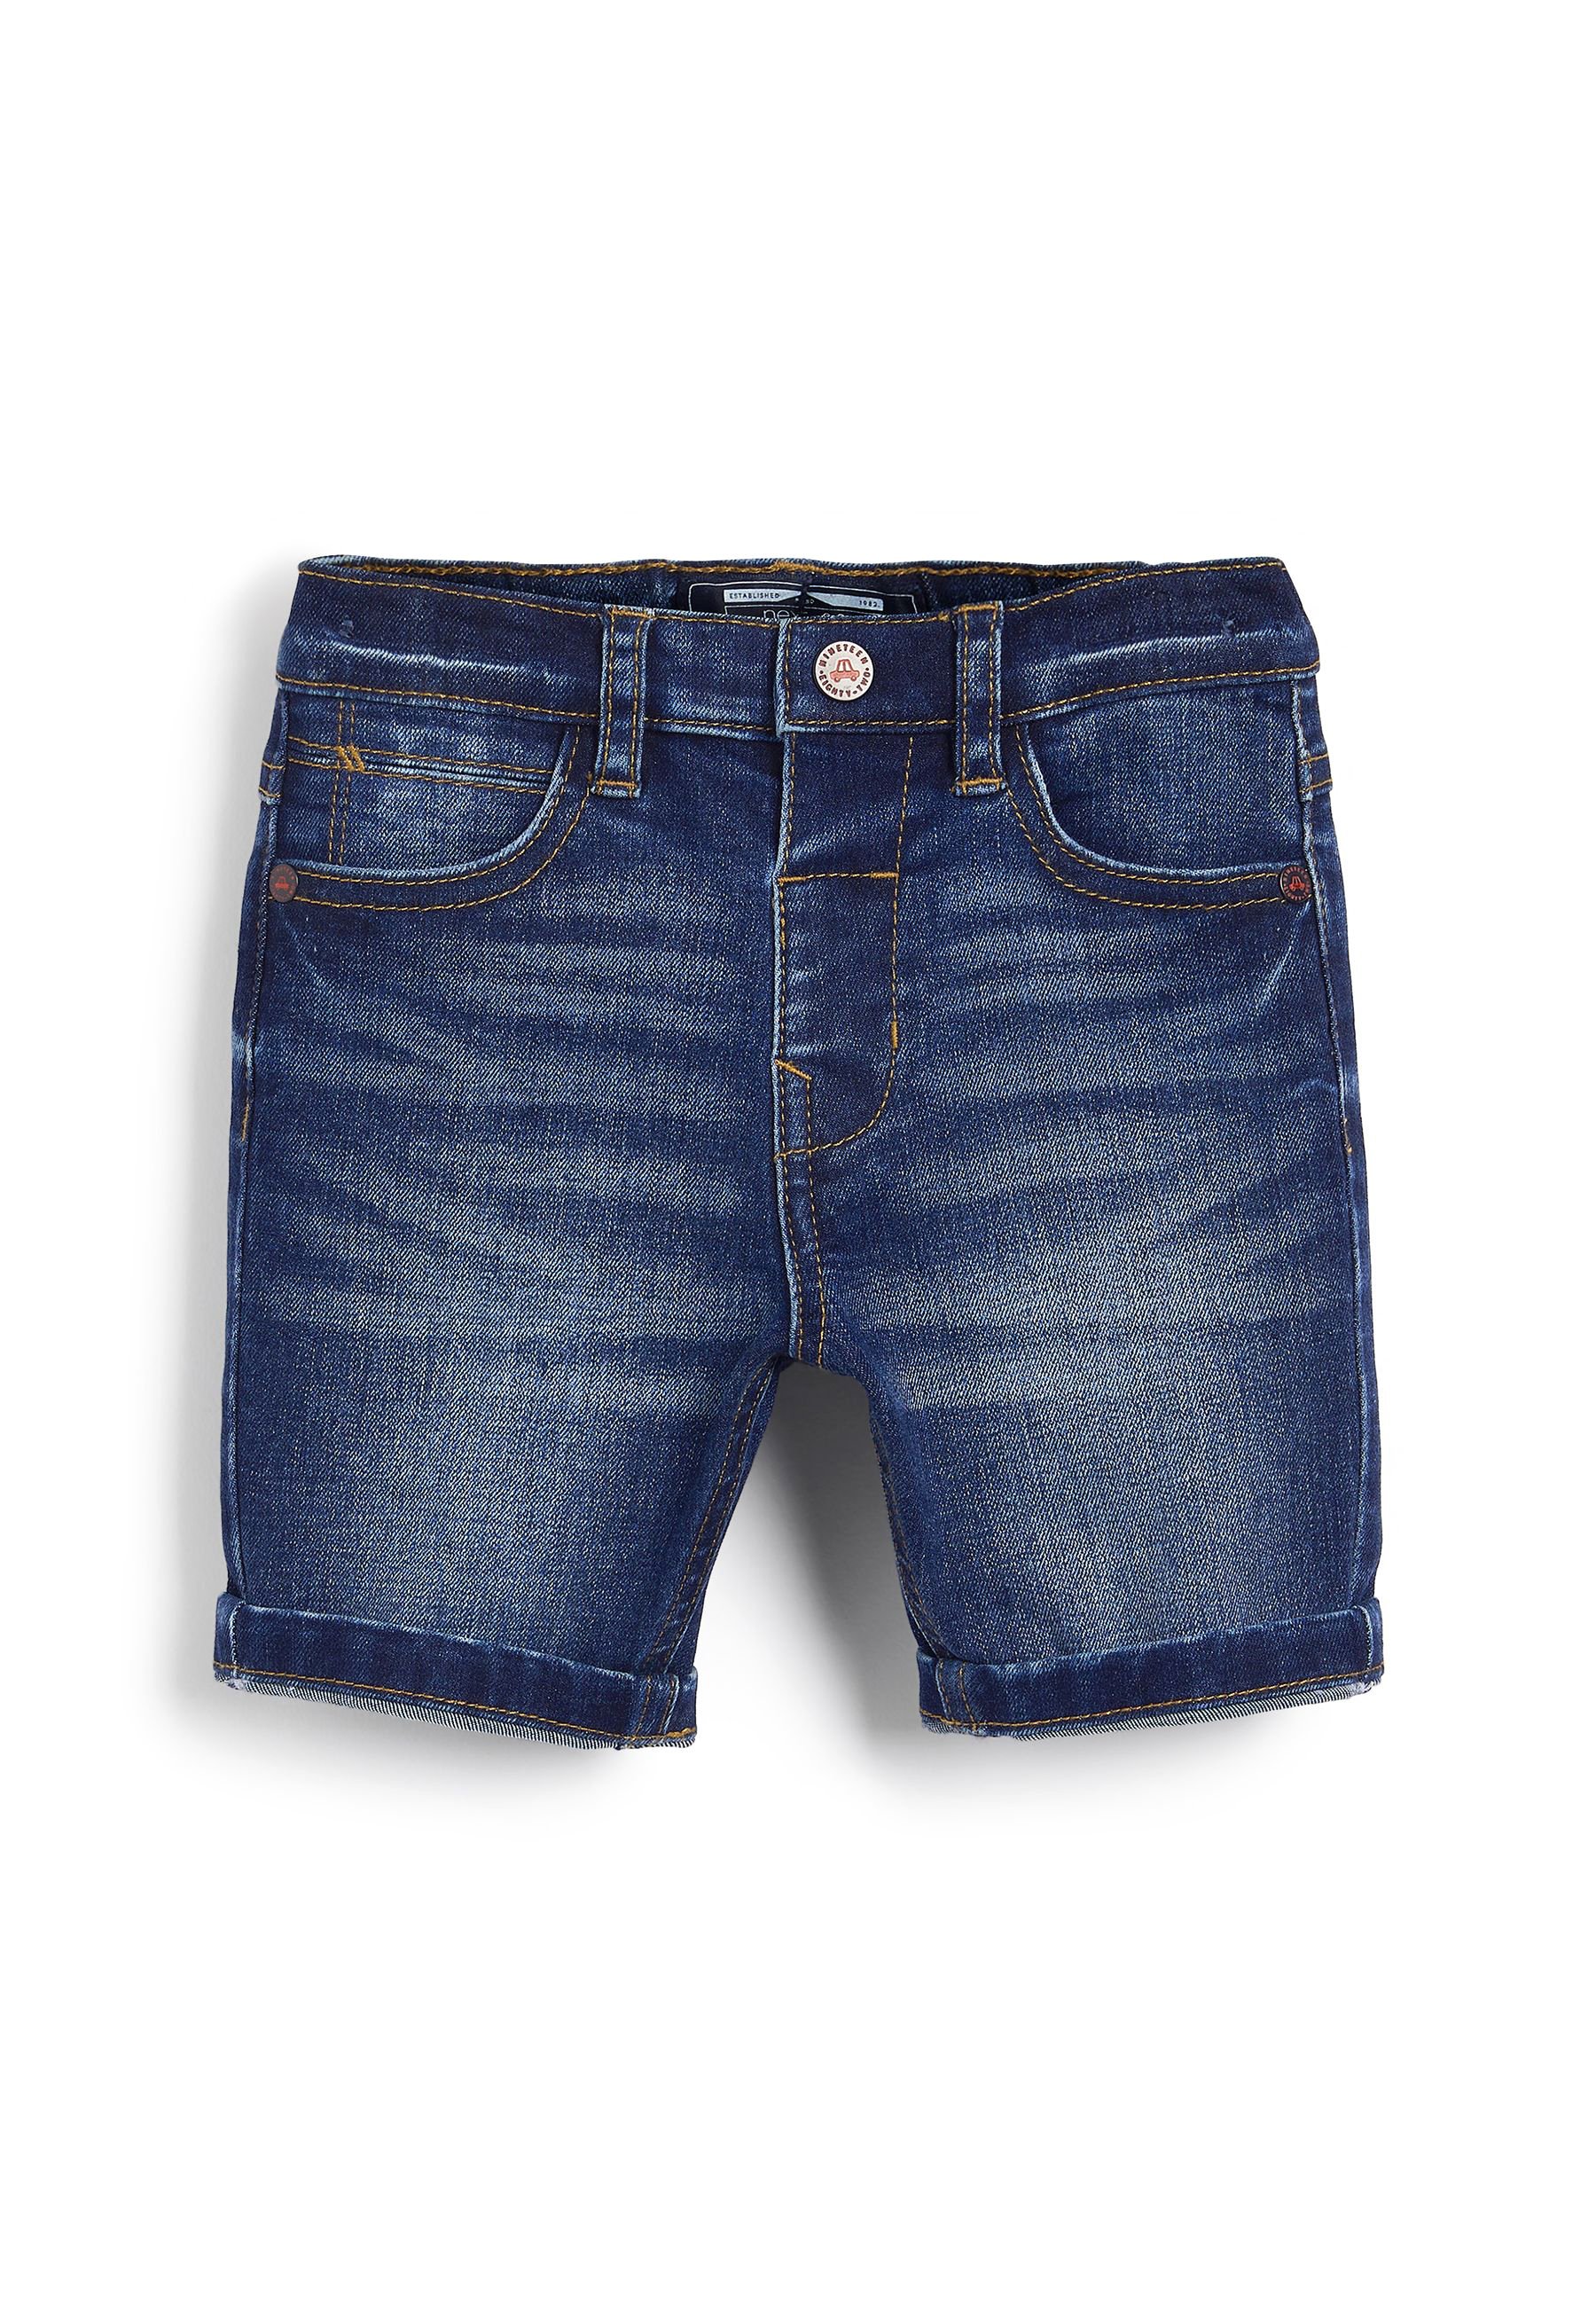 Next Jeans Shorts - dark blue/dunkelblau